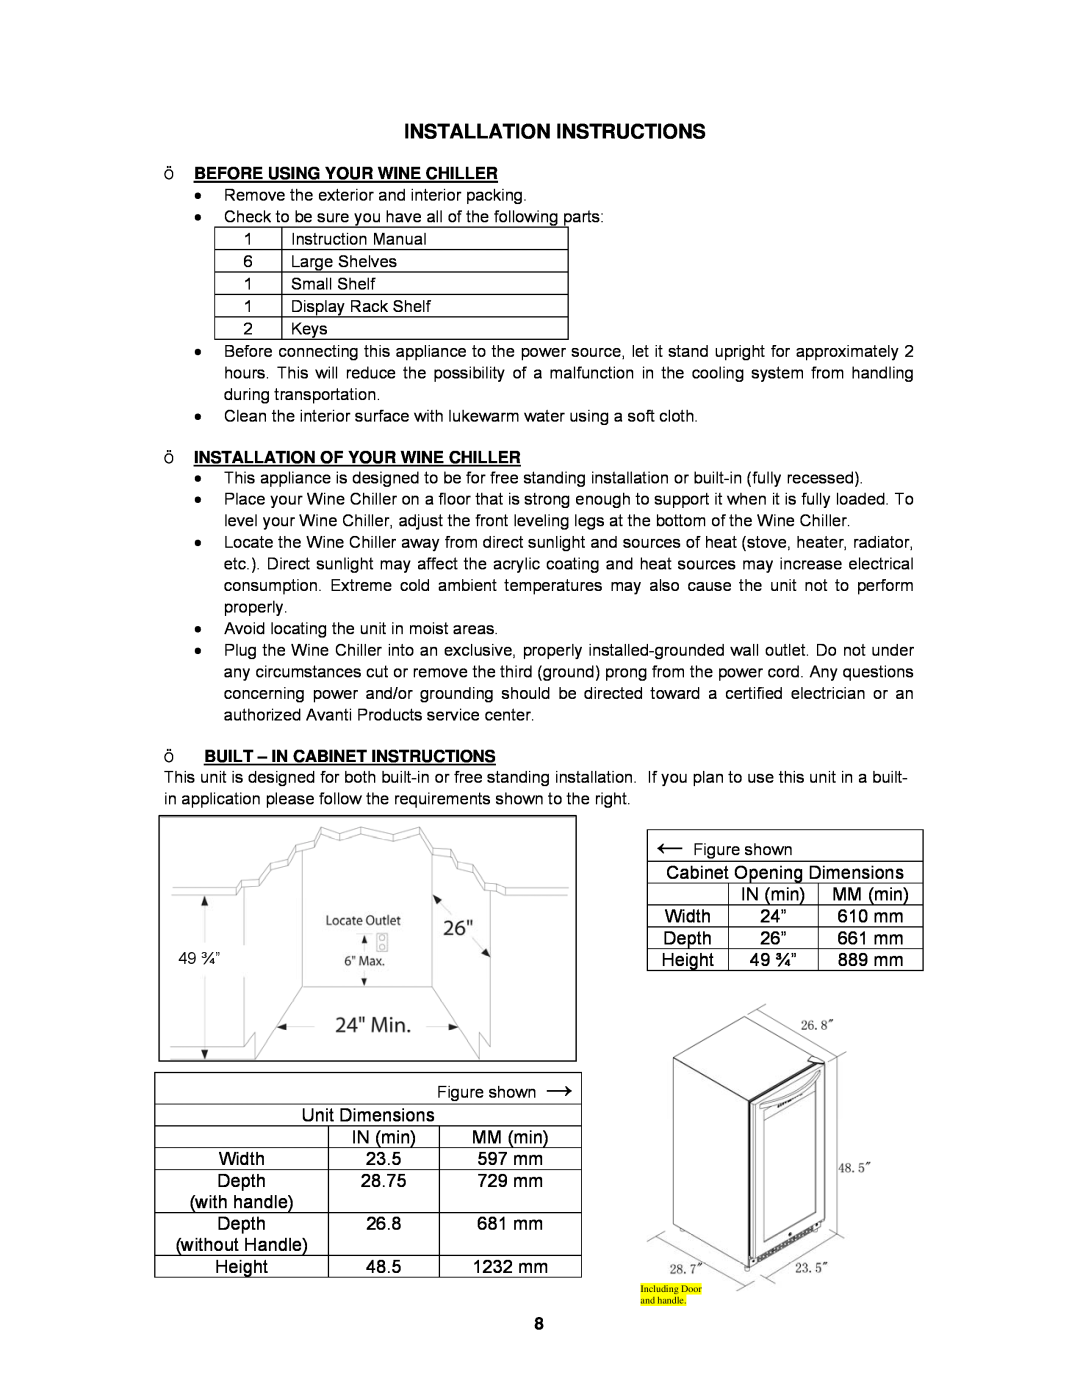 Avanti WCR9000S Installation Instructions, Unit Dimensions, IN min, MM min, 597 mm, 729 mm, 681 mm, Height 